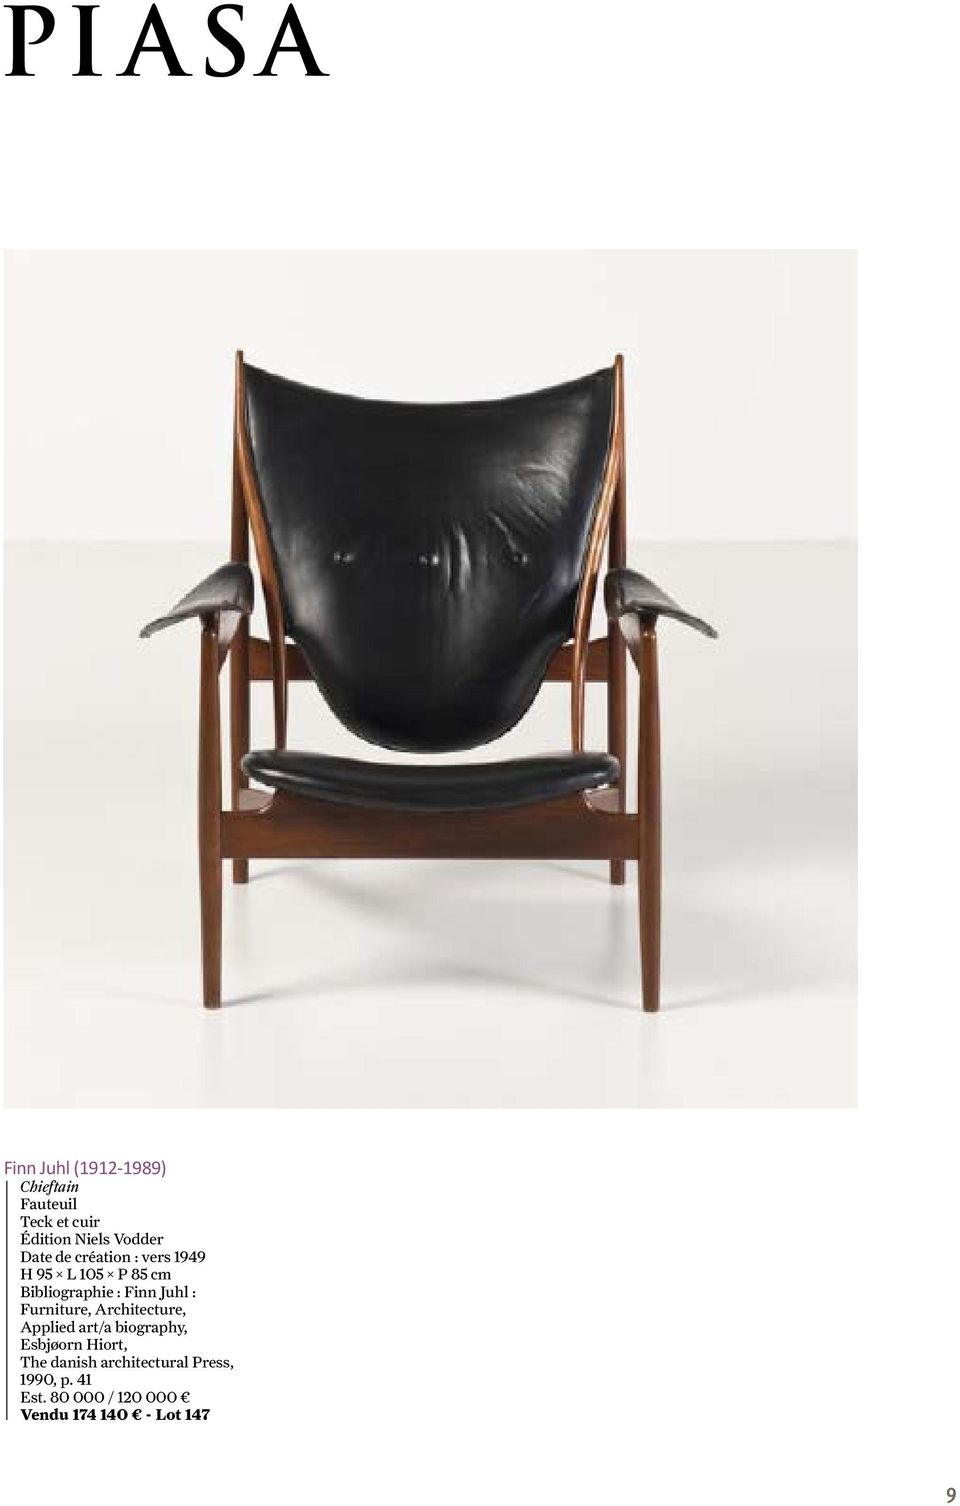 Furniture, Architecture, Applied art/a biography, Esbjøorn Hiort, The danish